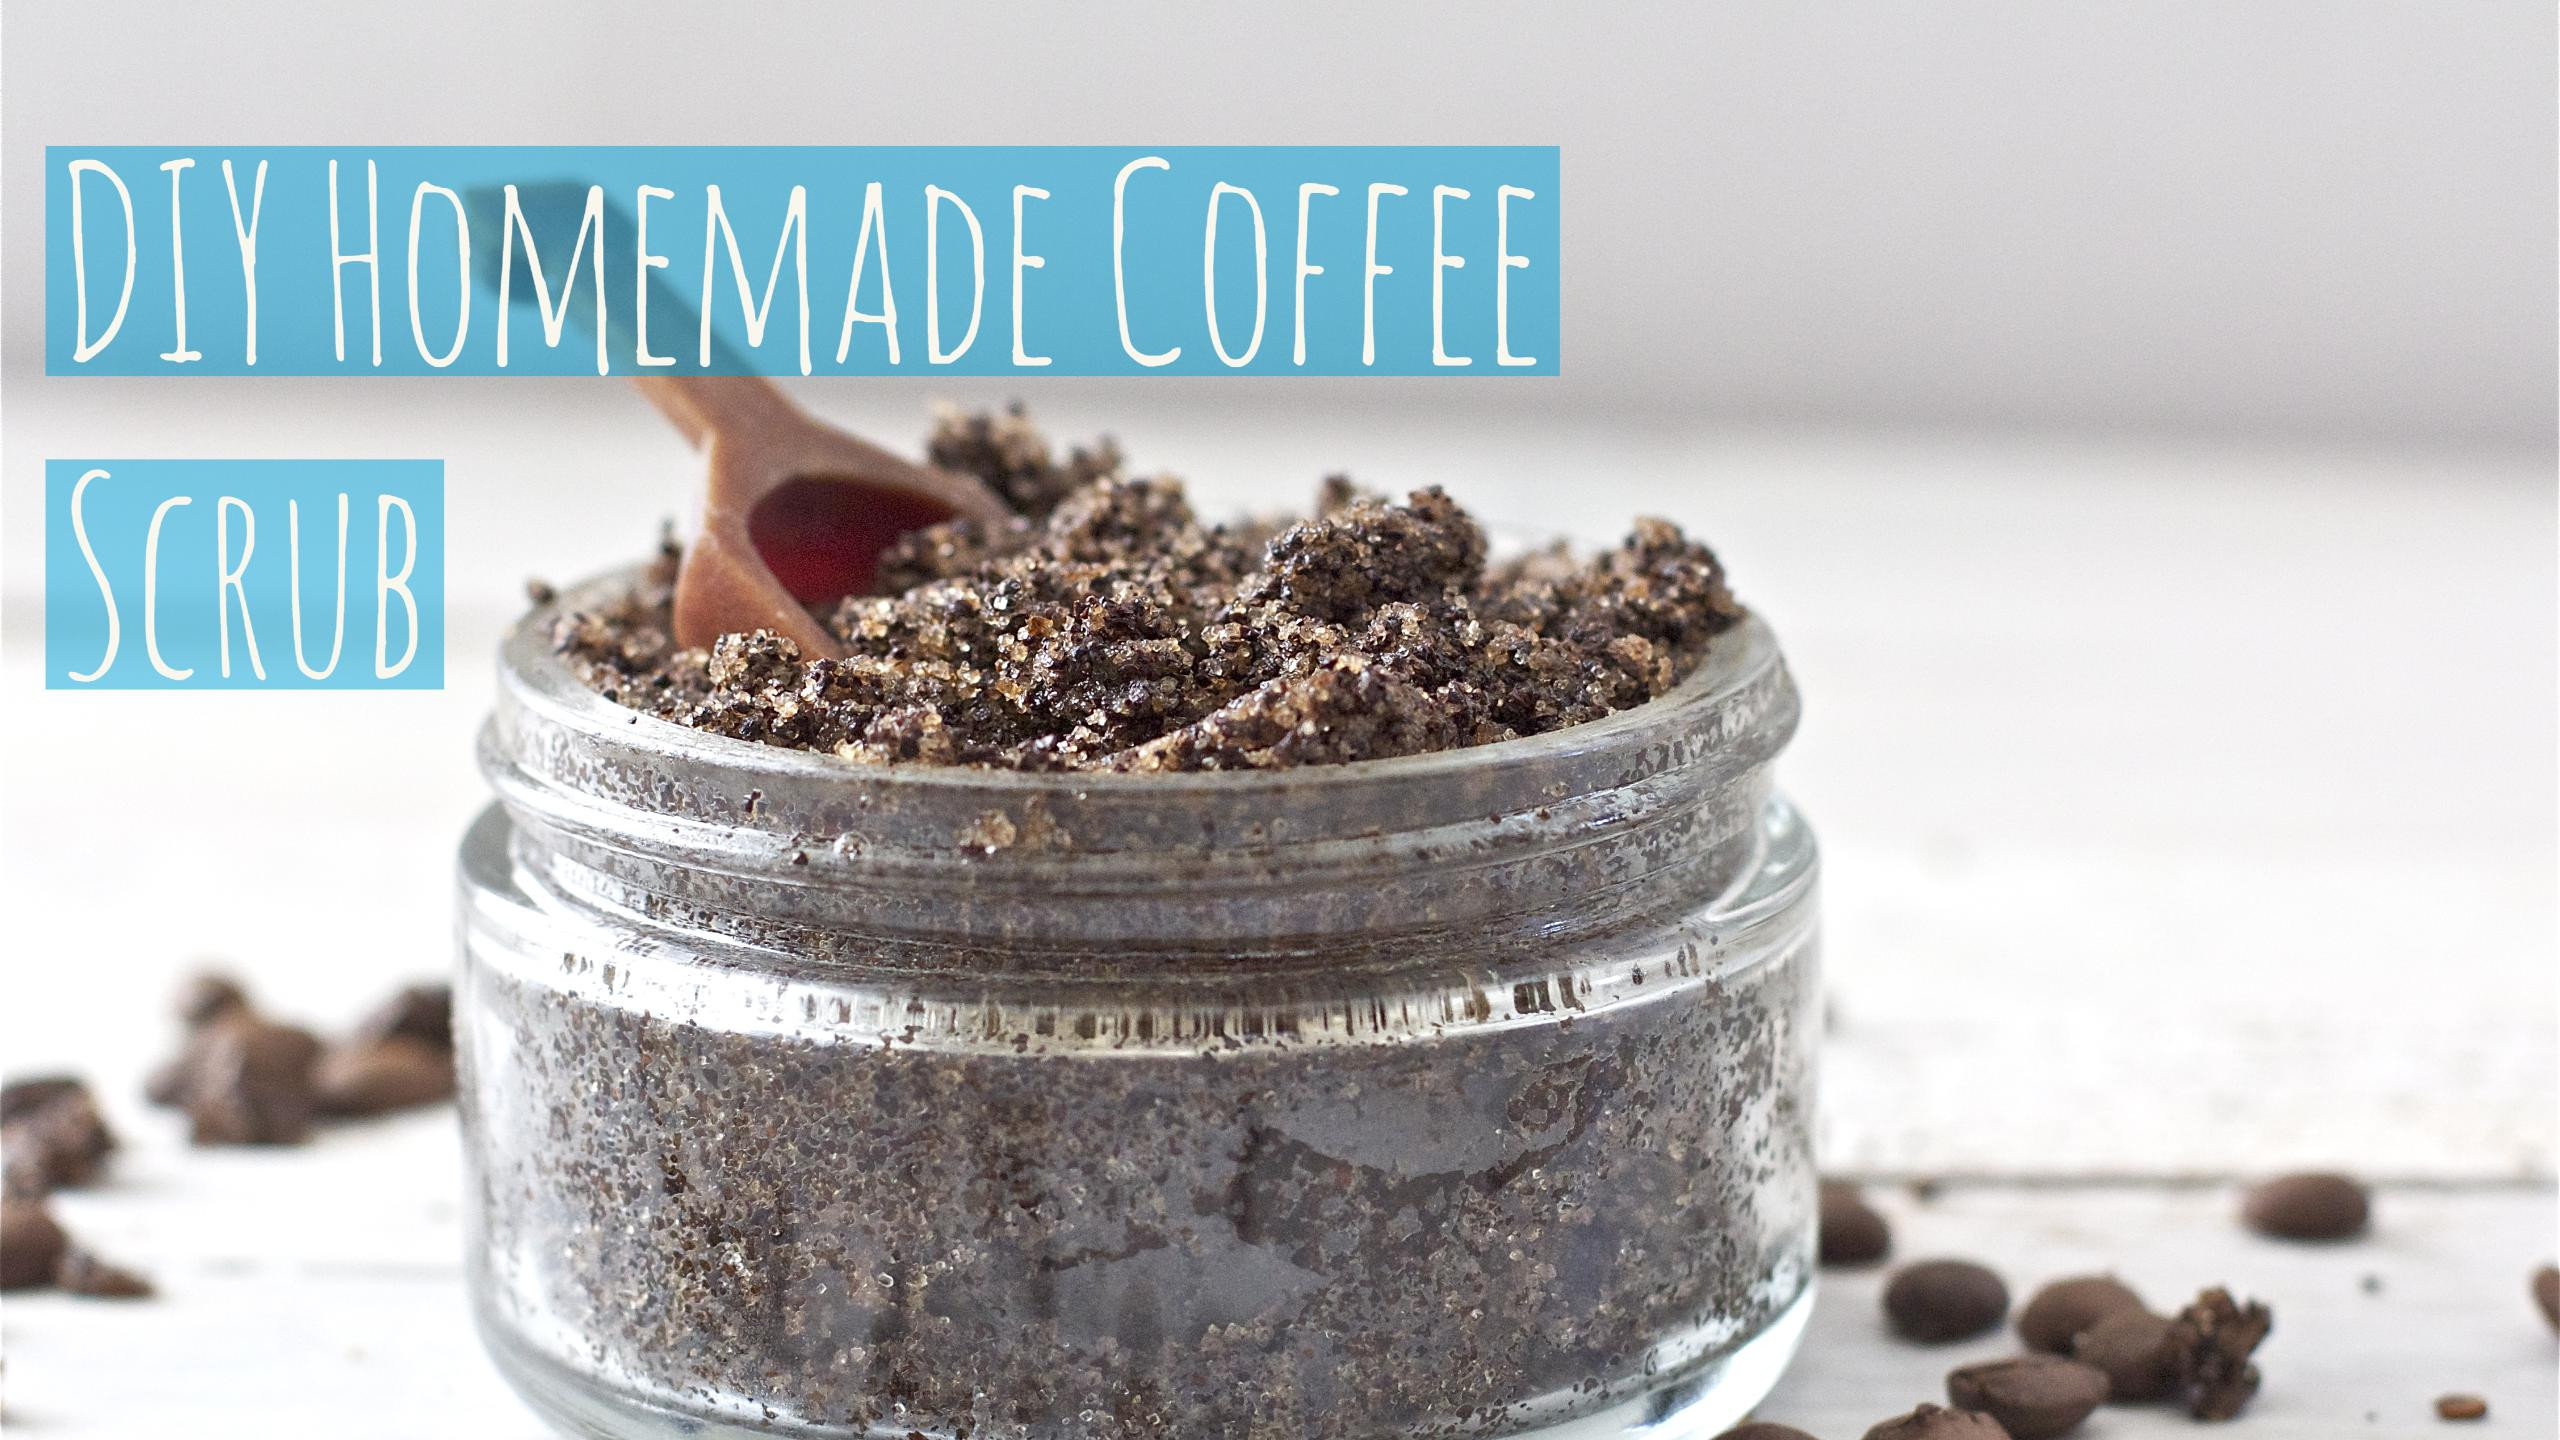 Best ideas about Coffee Scrub DIY
. Save or Pin DIY Homemade Coffee Scrub Now.